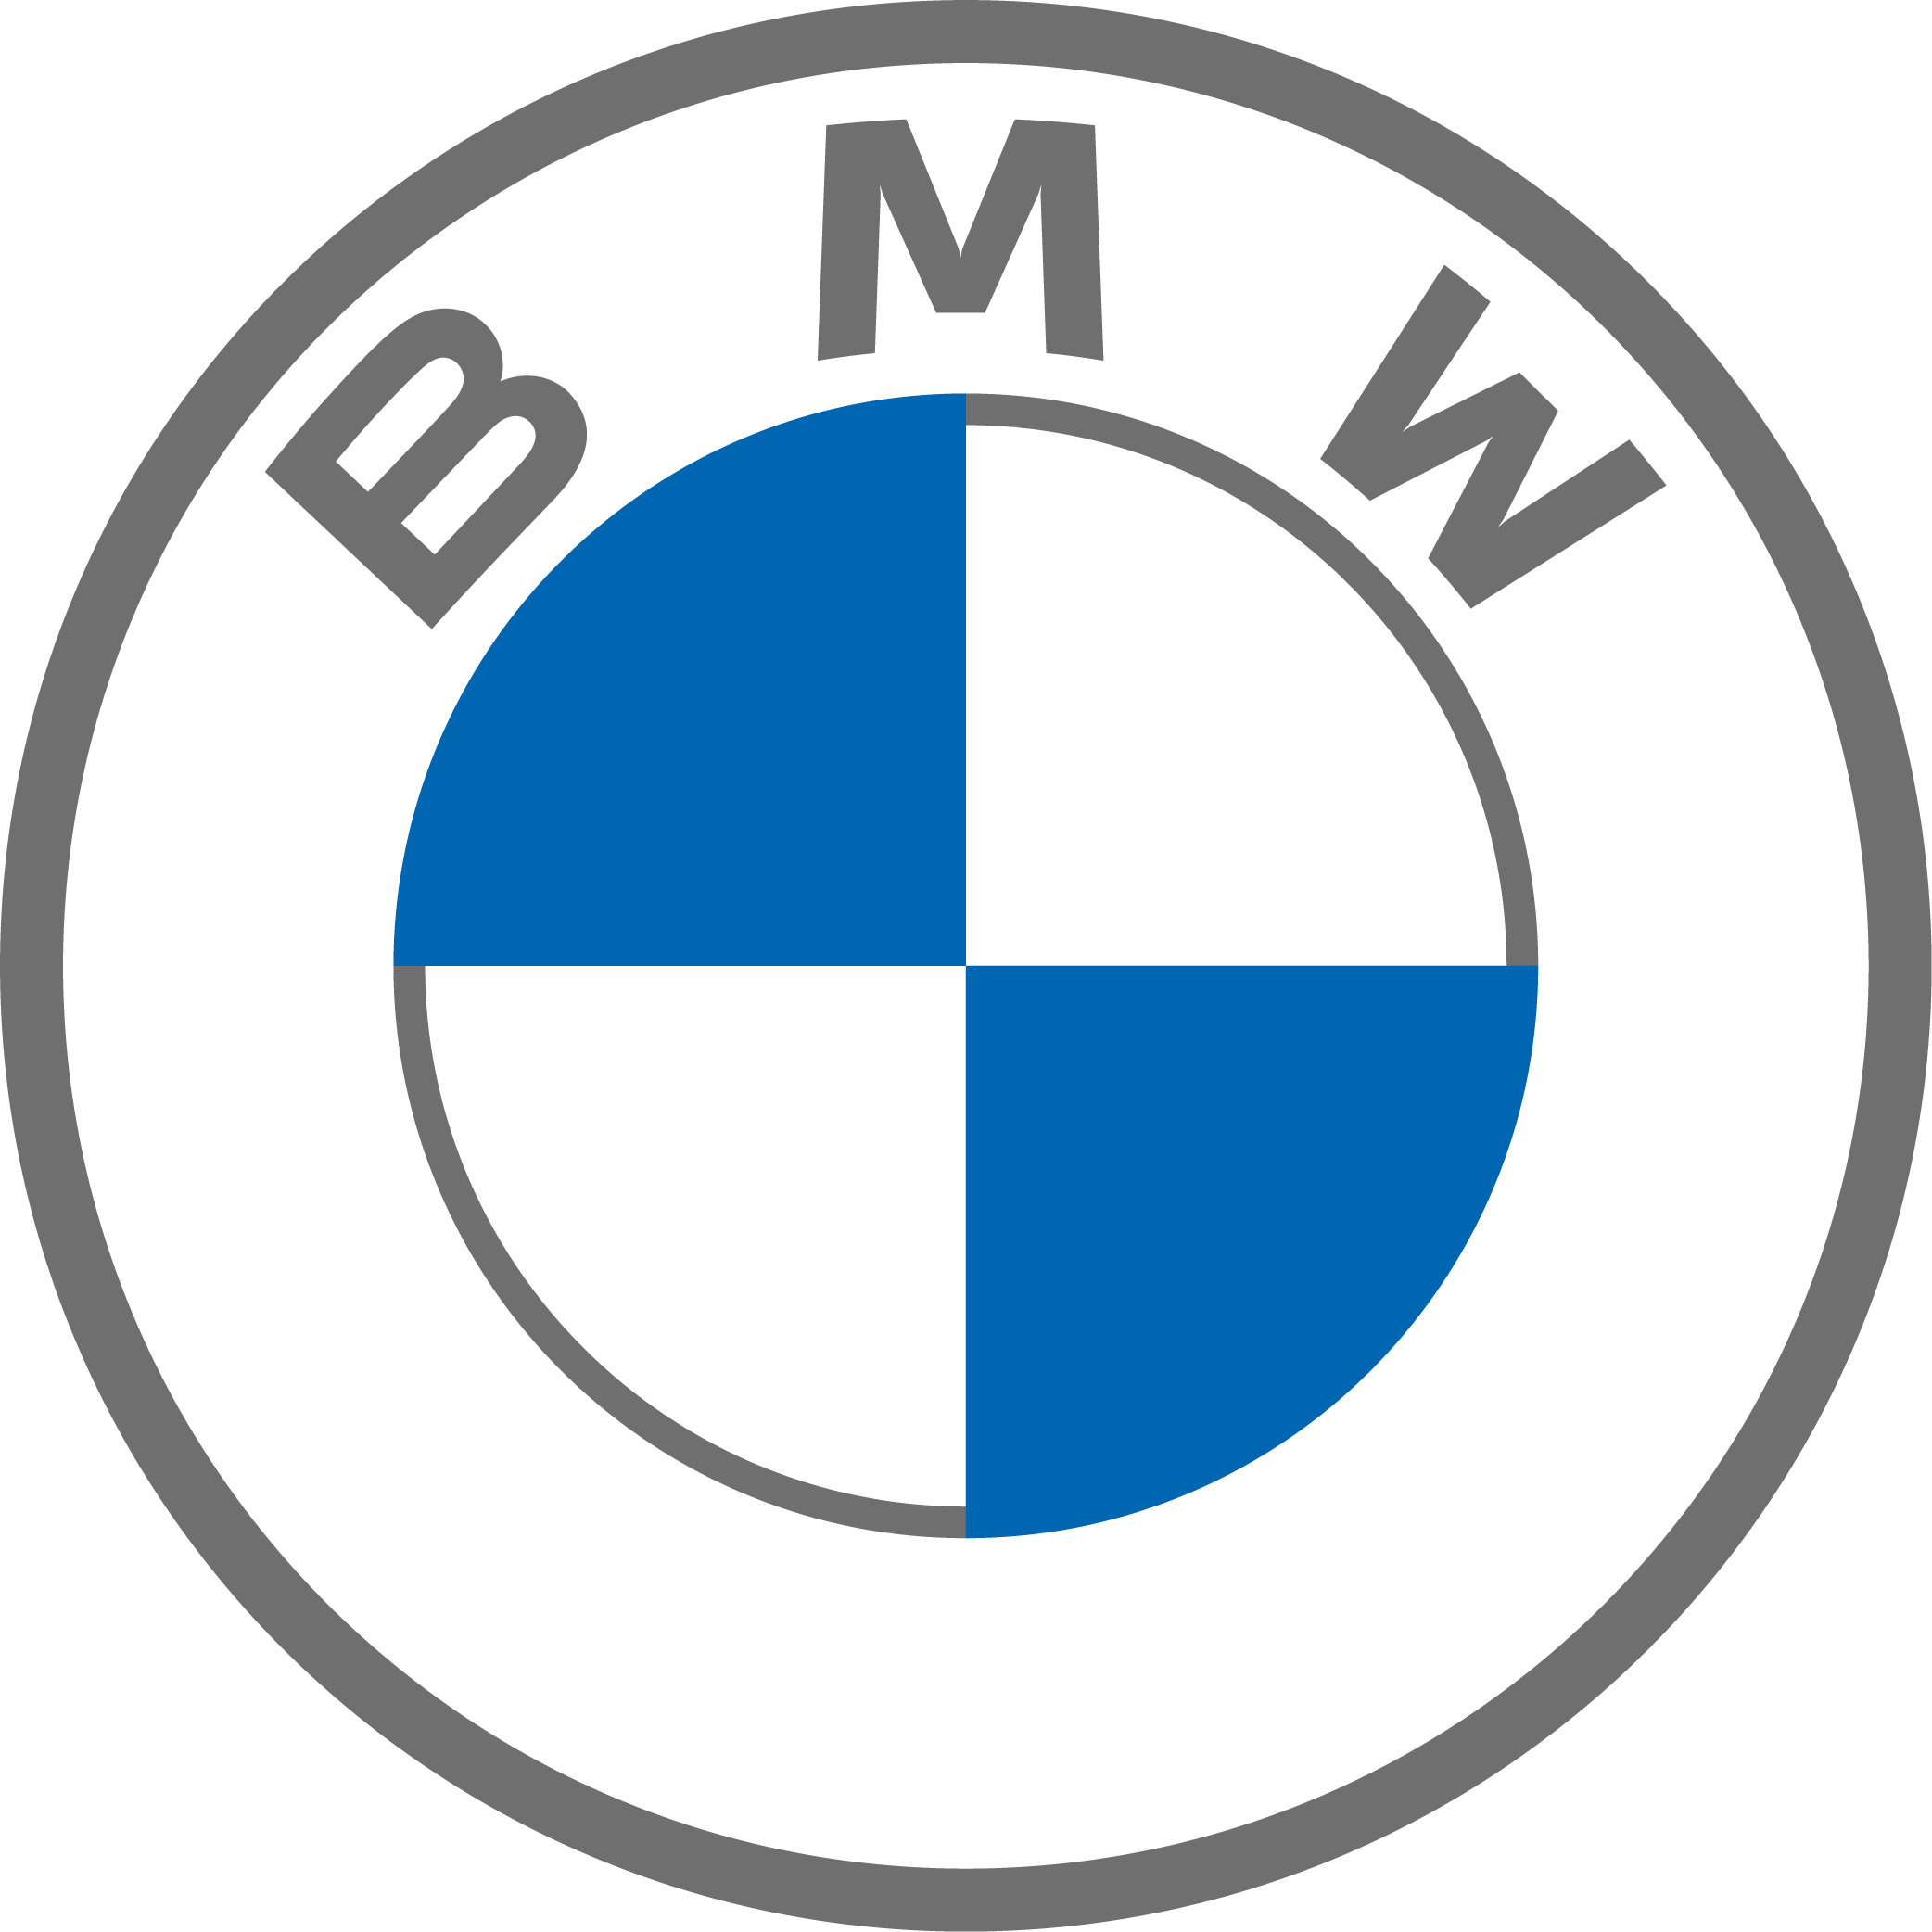 BMW M2: Το νέο αυτοκίνητο ασφαλείας του MotoGP